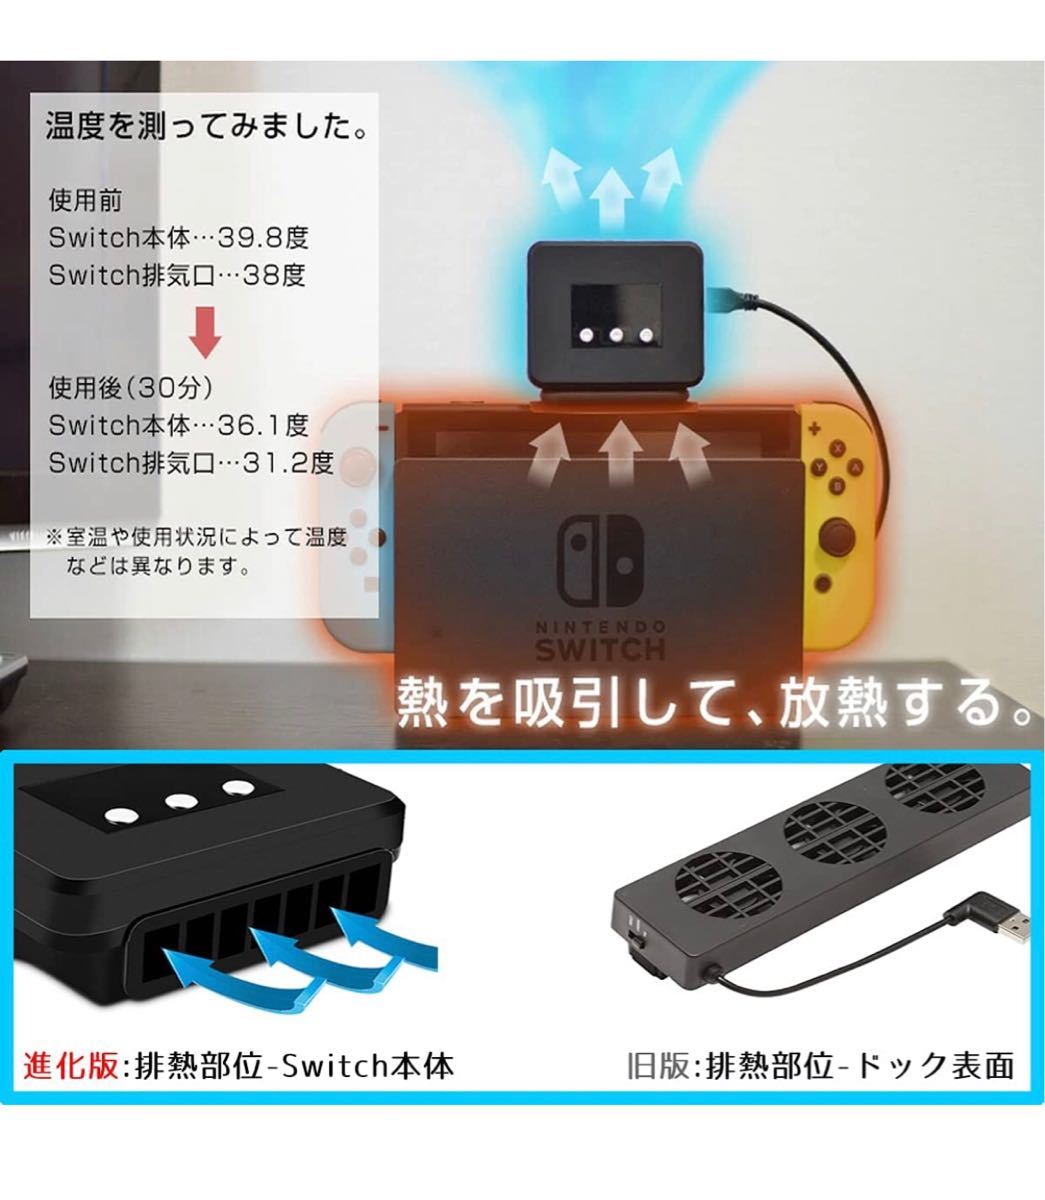 Nintendo Switch 冷却ファン 任天堂 スイッチ専用 冷却 クーラー ハイパワー冷却ファン 熱対策 スイッチドック